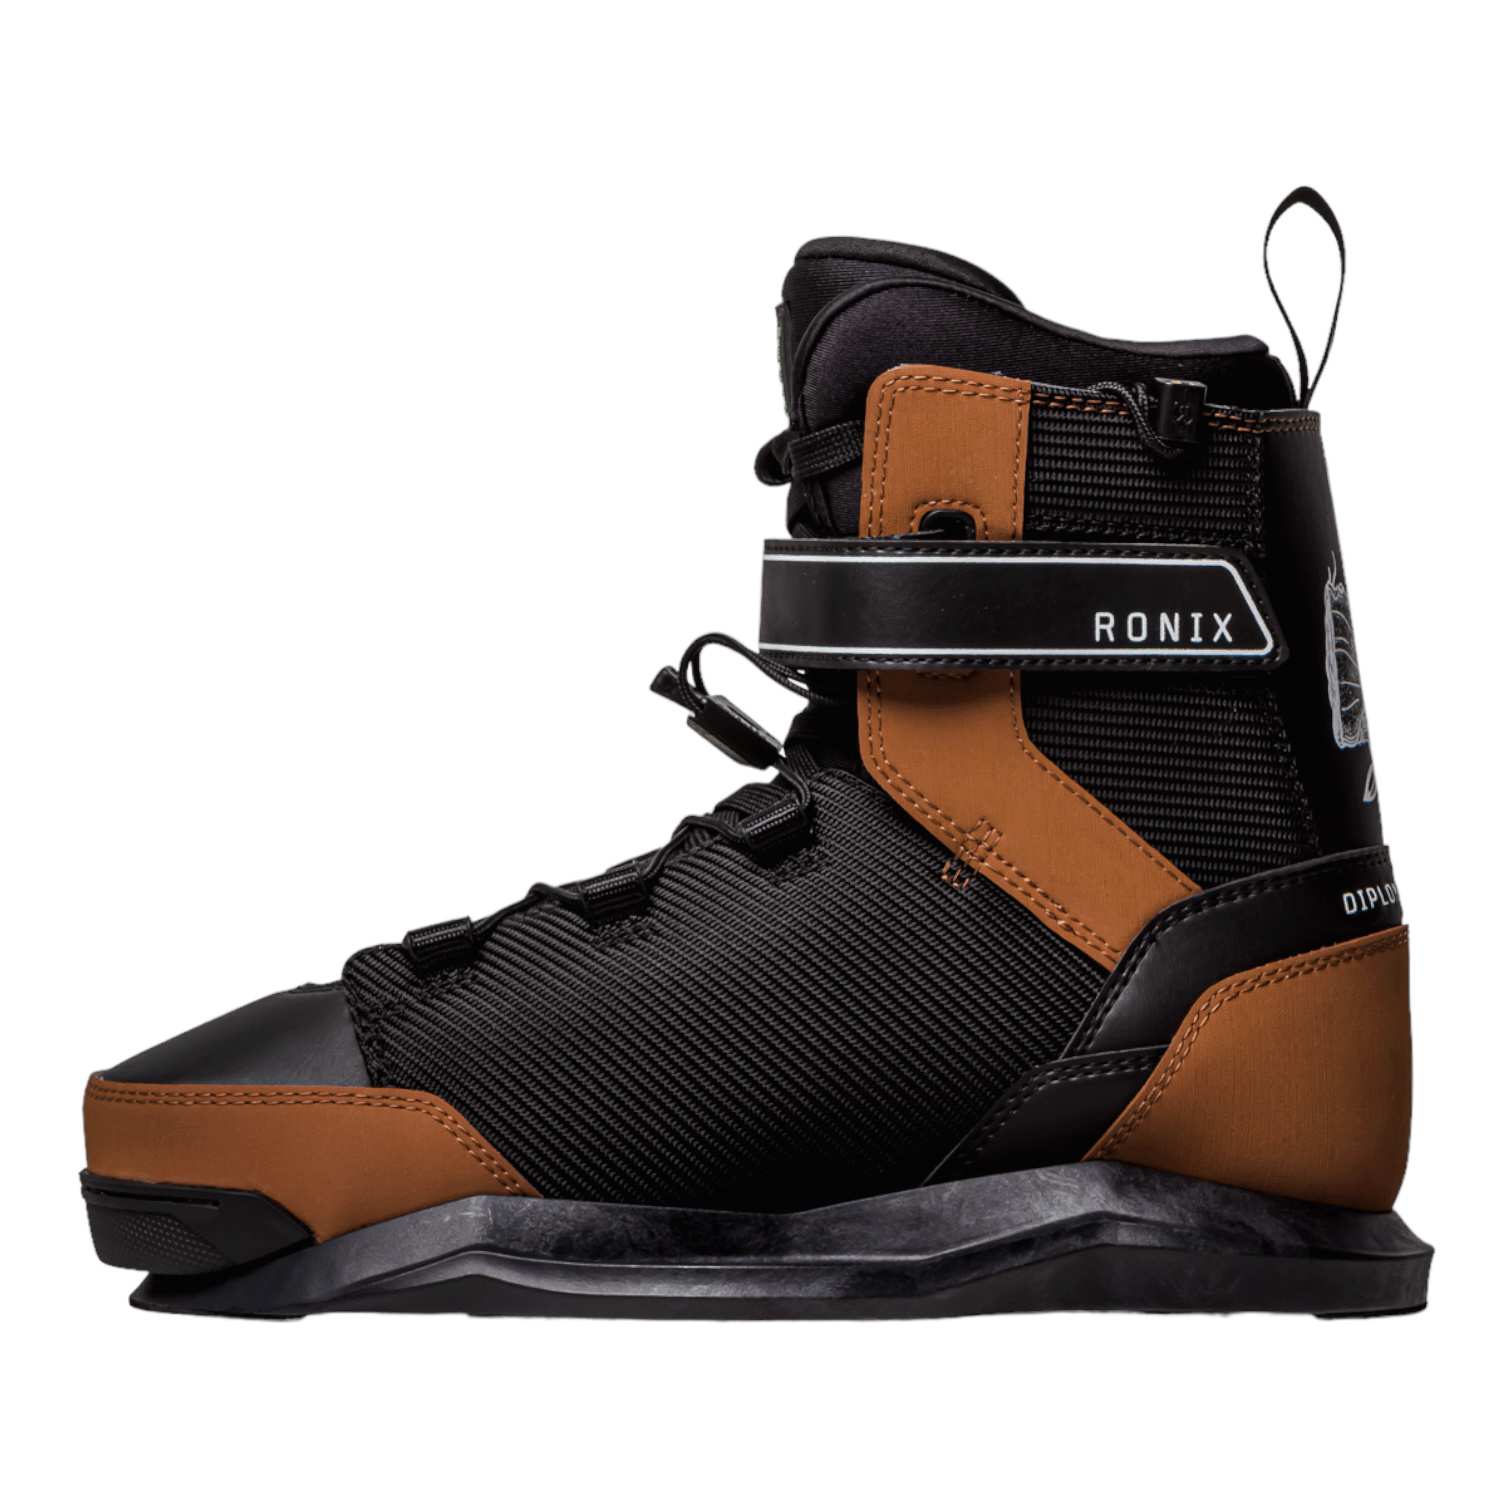 Ronix Diplomat EXP Boots - Black/Brown